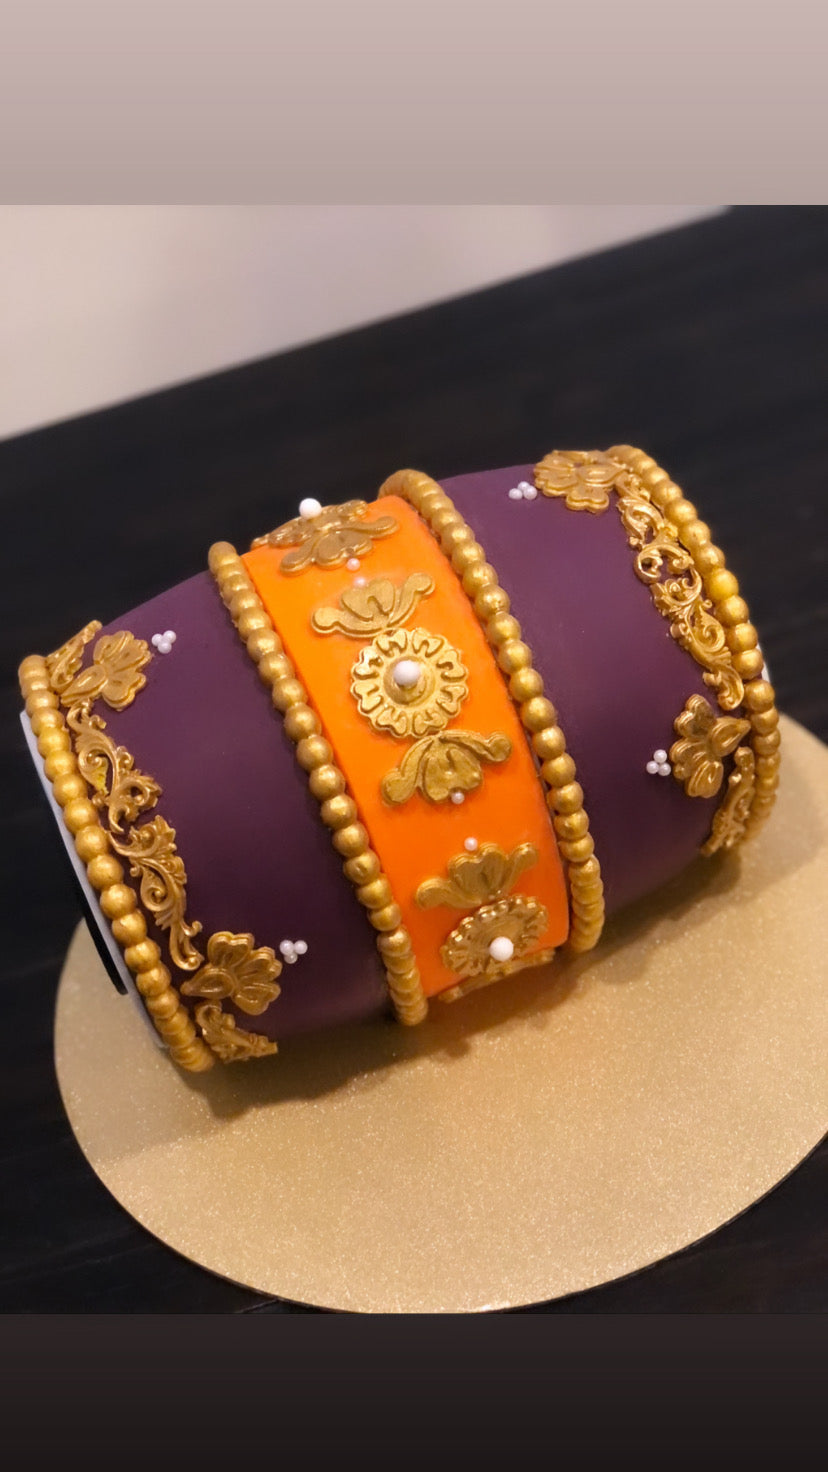 Dhol molded cake - Rashmi's Bakery